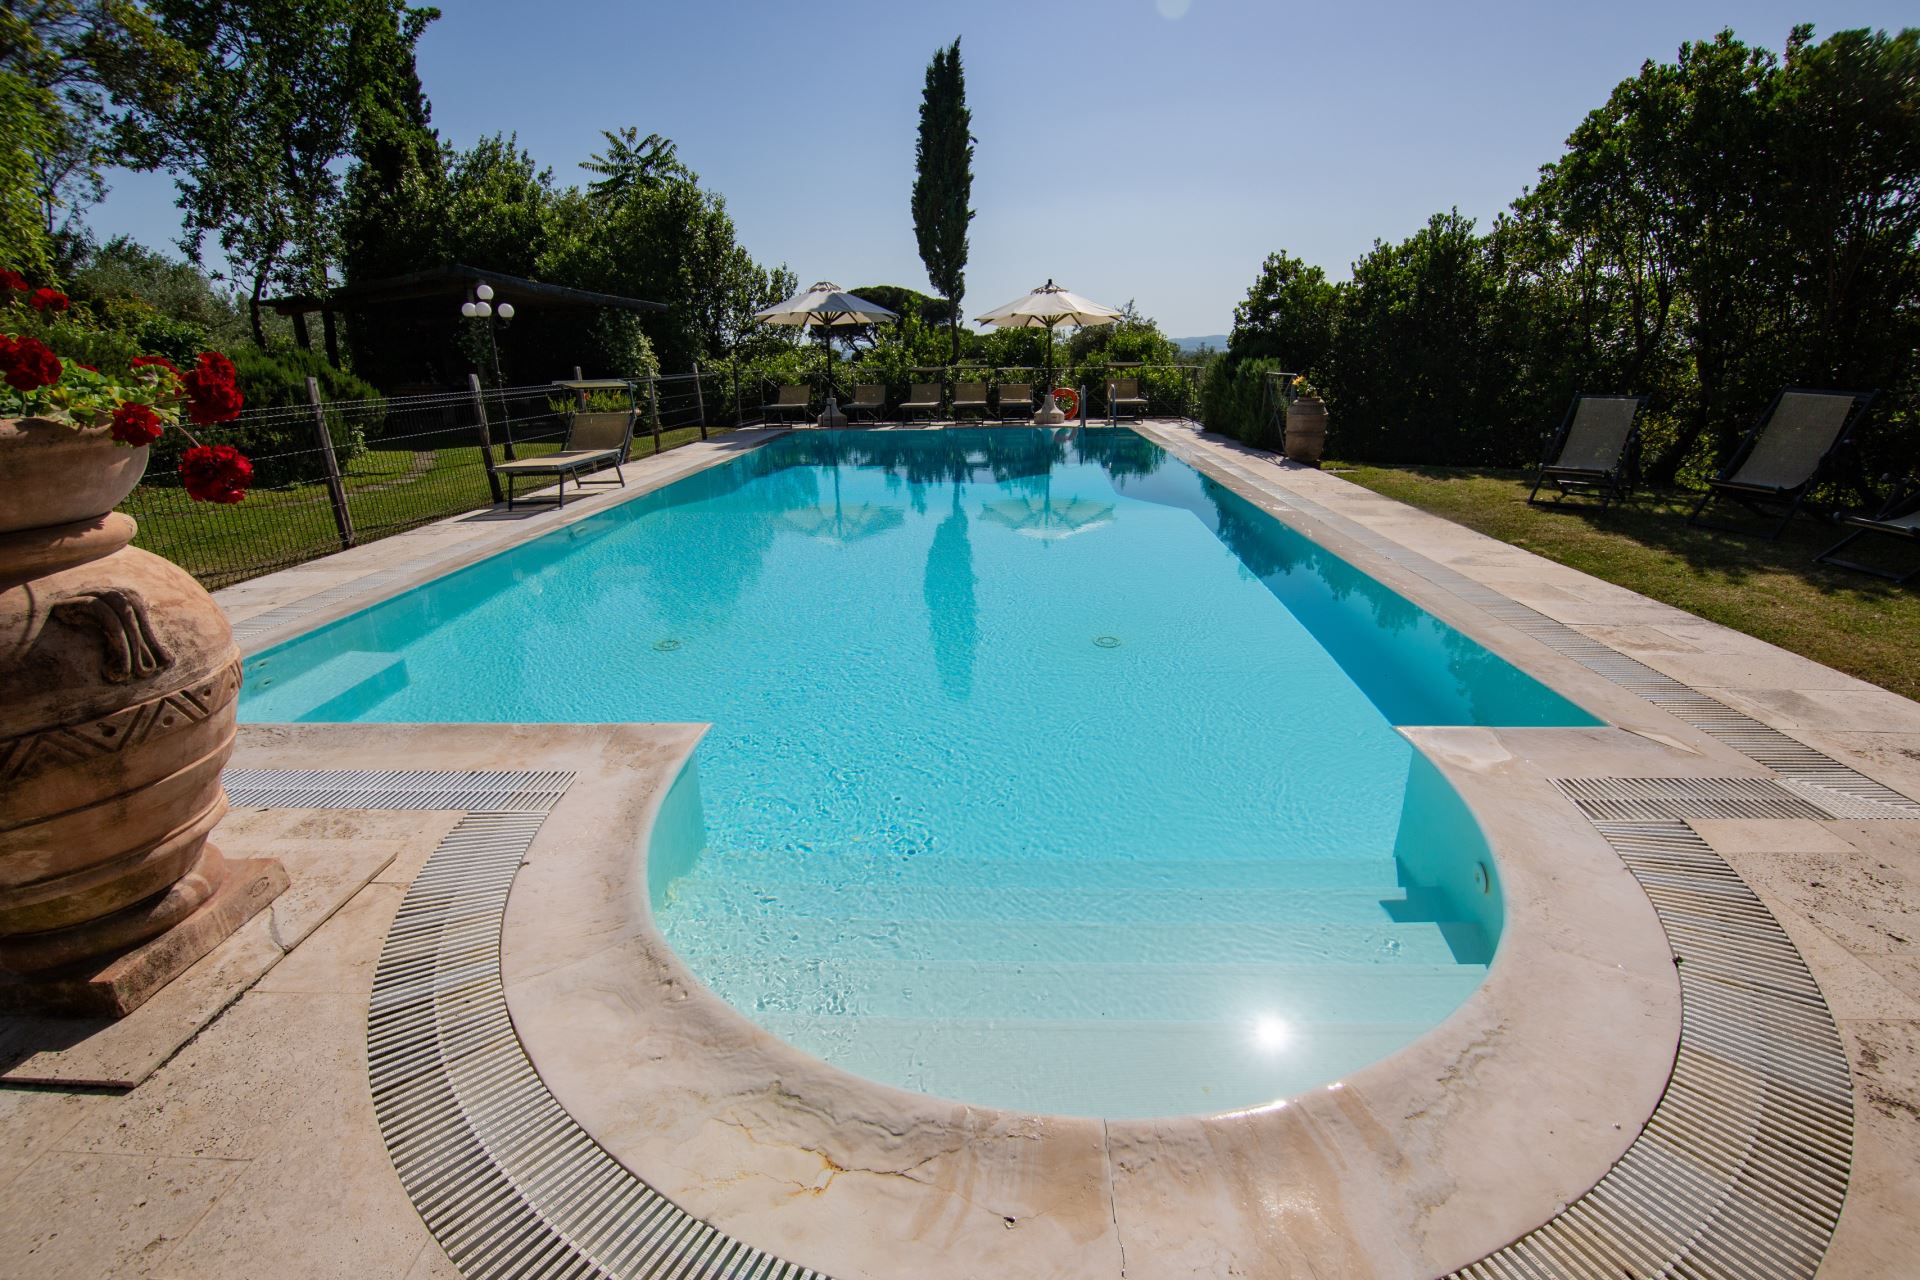 454_9811982_Casa Degli Ulivi, vakantiewoning met omheind prive zwembad, Toscane, Arezzo, villa (9)